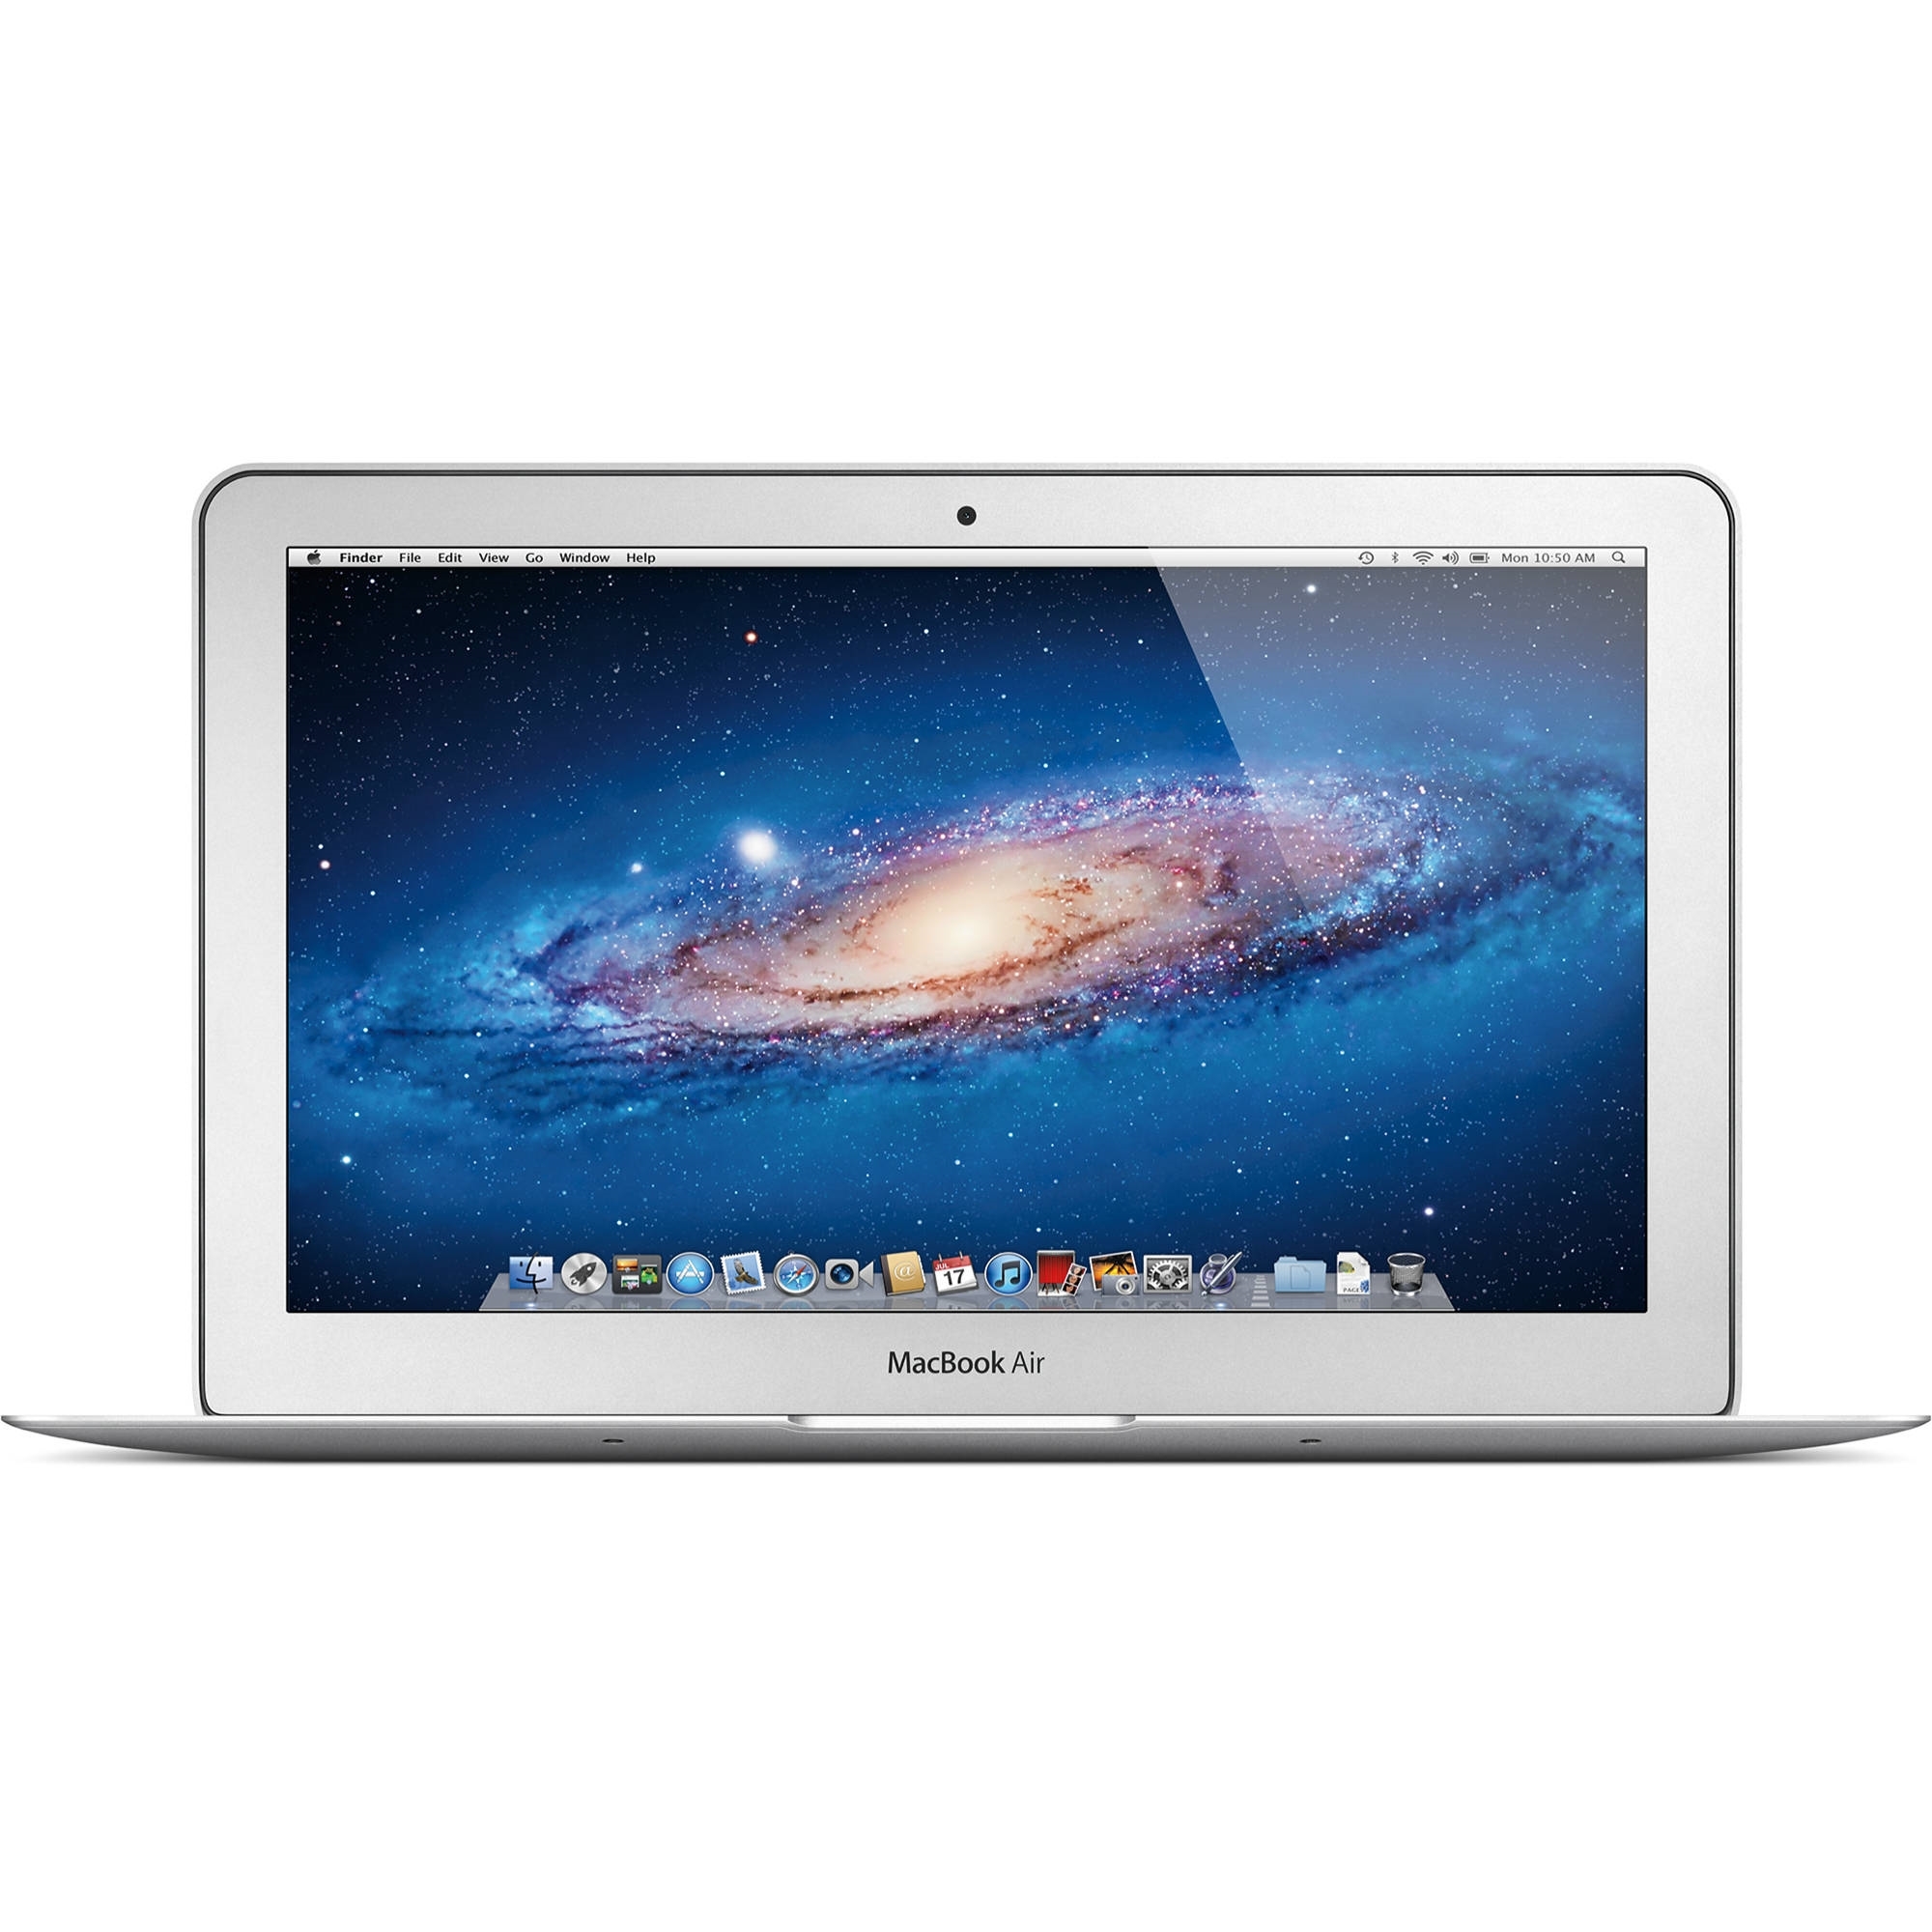 Restored Apple MacBook Air MD223LL/A Intel Core i5-3317U X2 1.7GHz 4GB 64GB SSD, Silver (Refurbished) - image 1 of 4